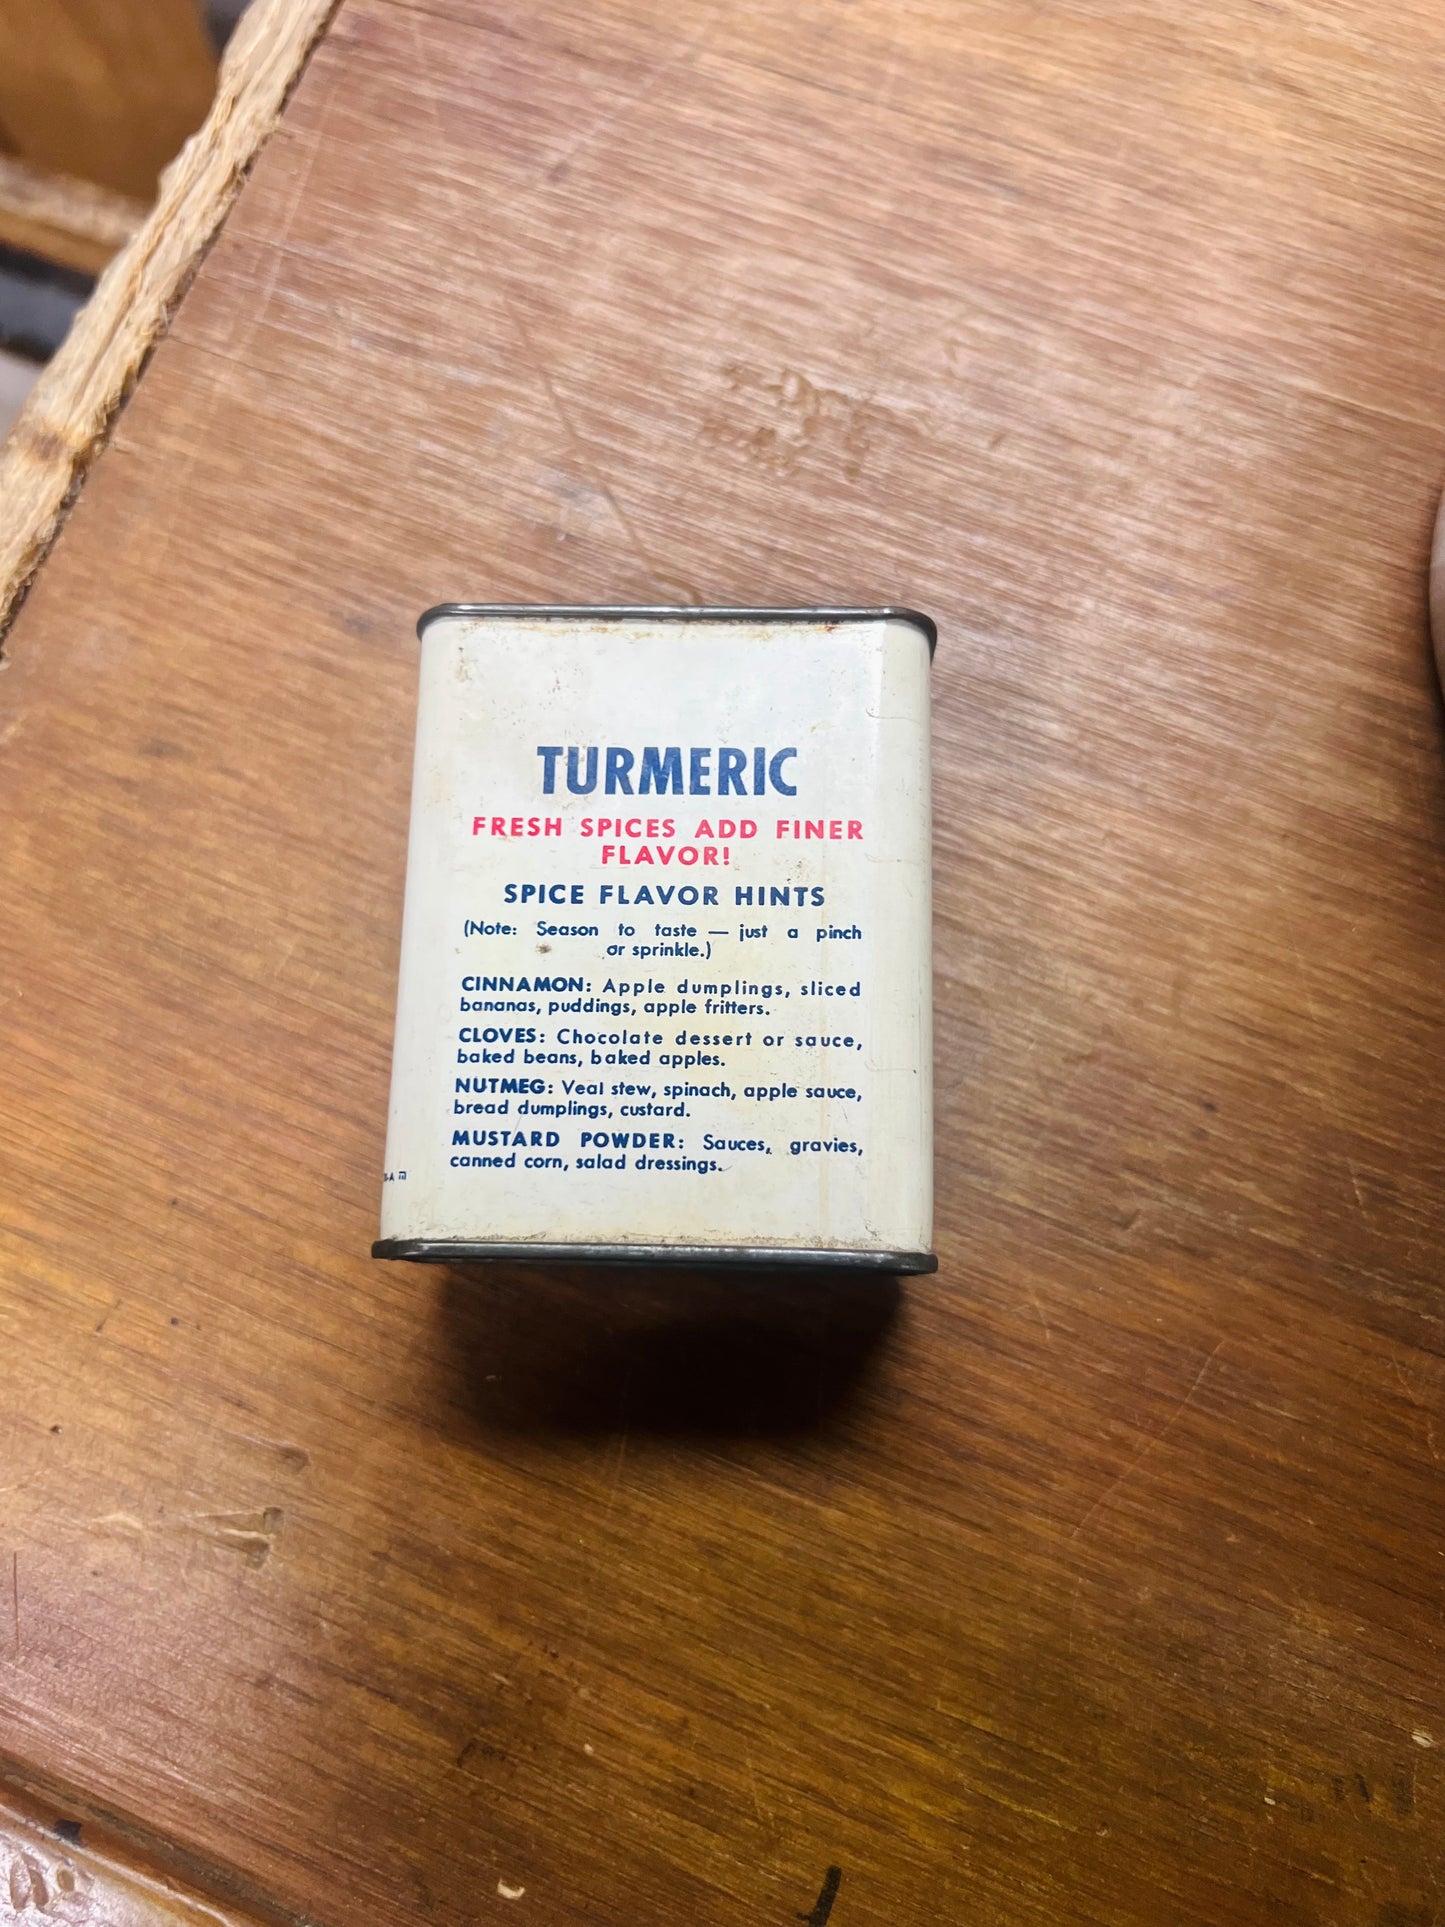 Old Metal PLEE-ZING Turmeric Can